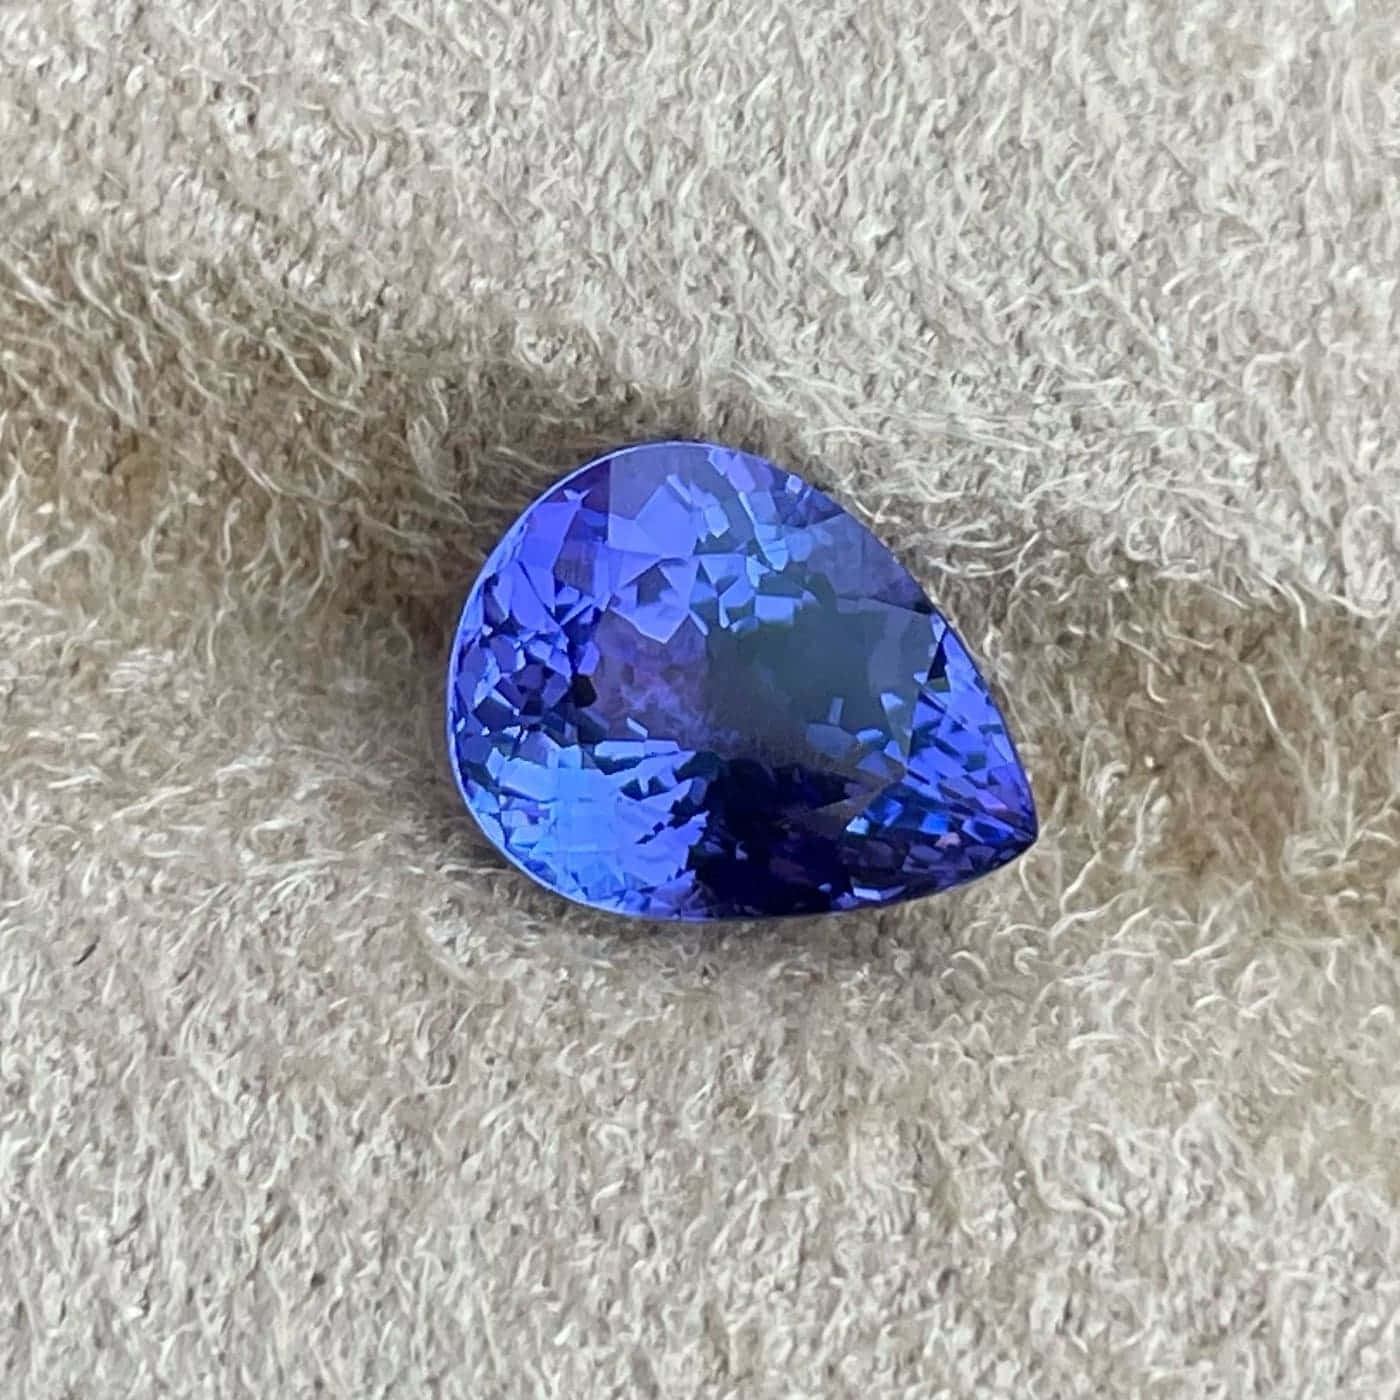 A Blue Tanzanite Gemstone On A White Surface